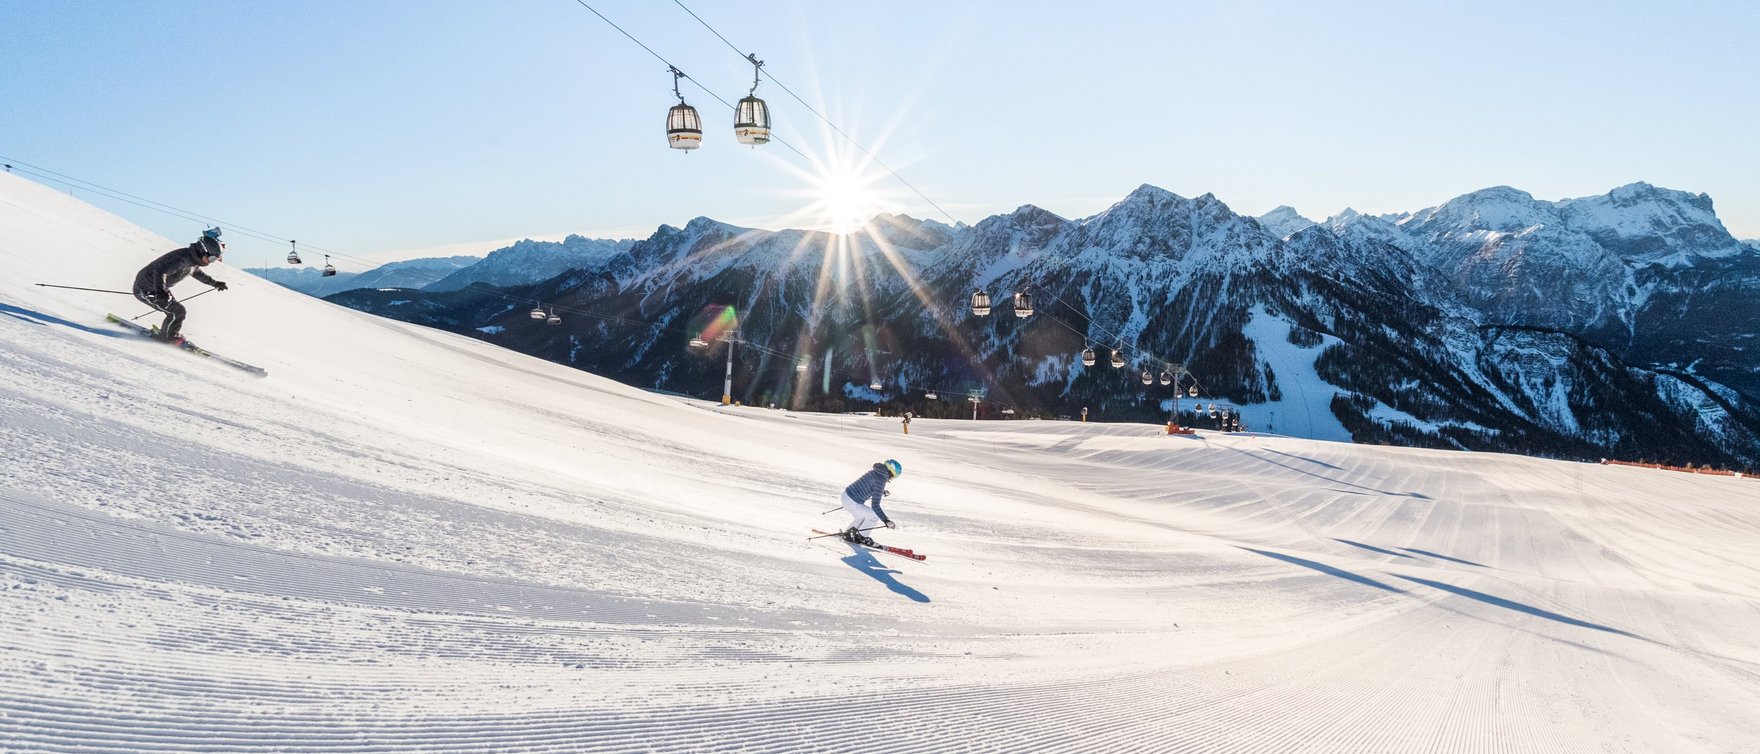 4-star hotel near Plan de Corones: perfect skiing weather